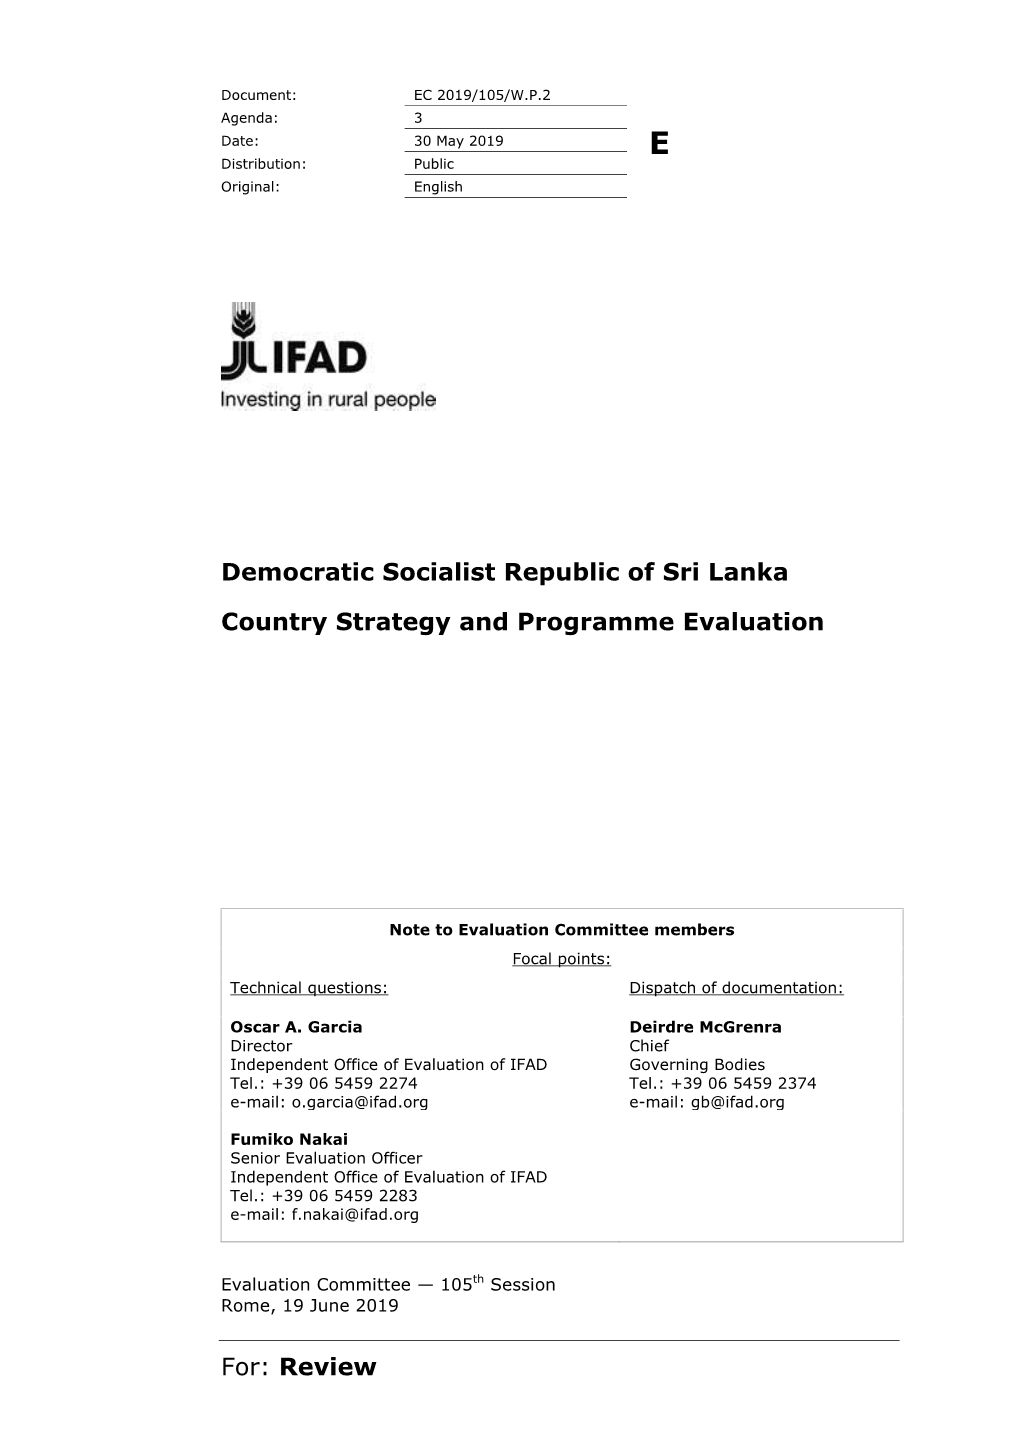 For: Review Democratic Socialist Republic of Sri Lanka Country